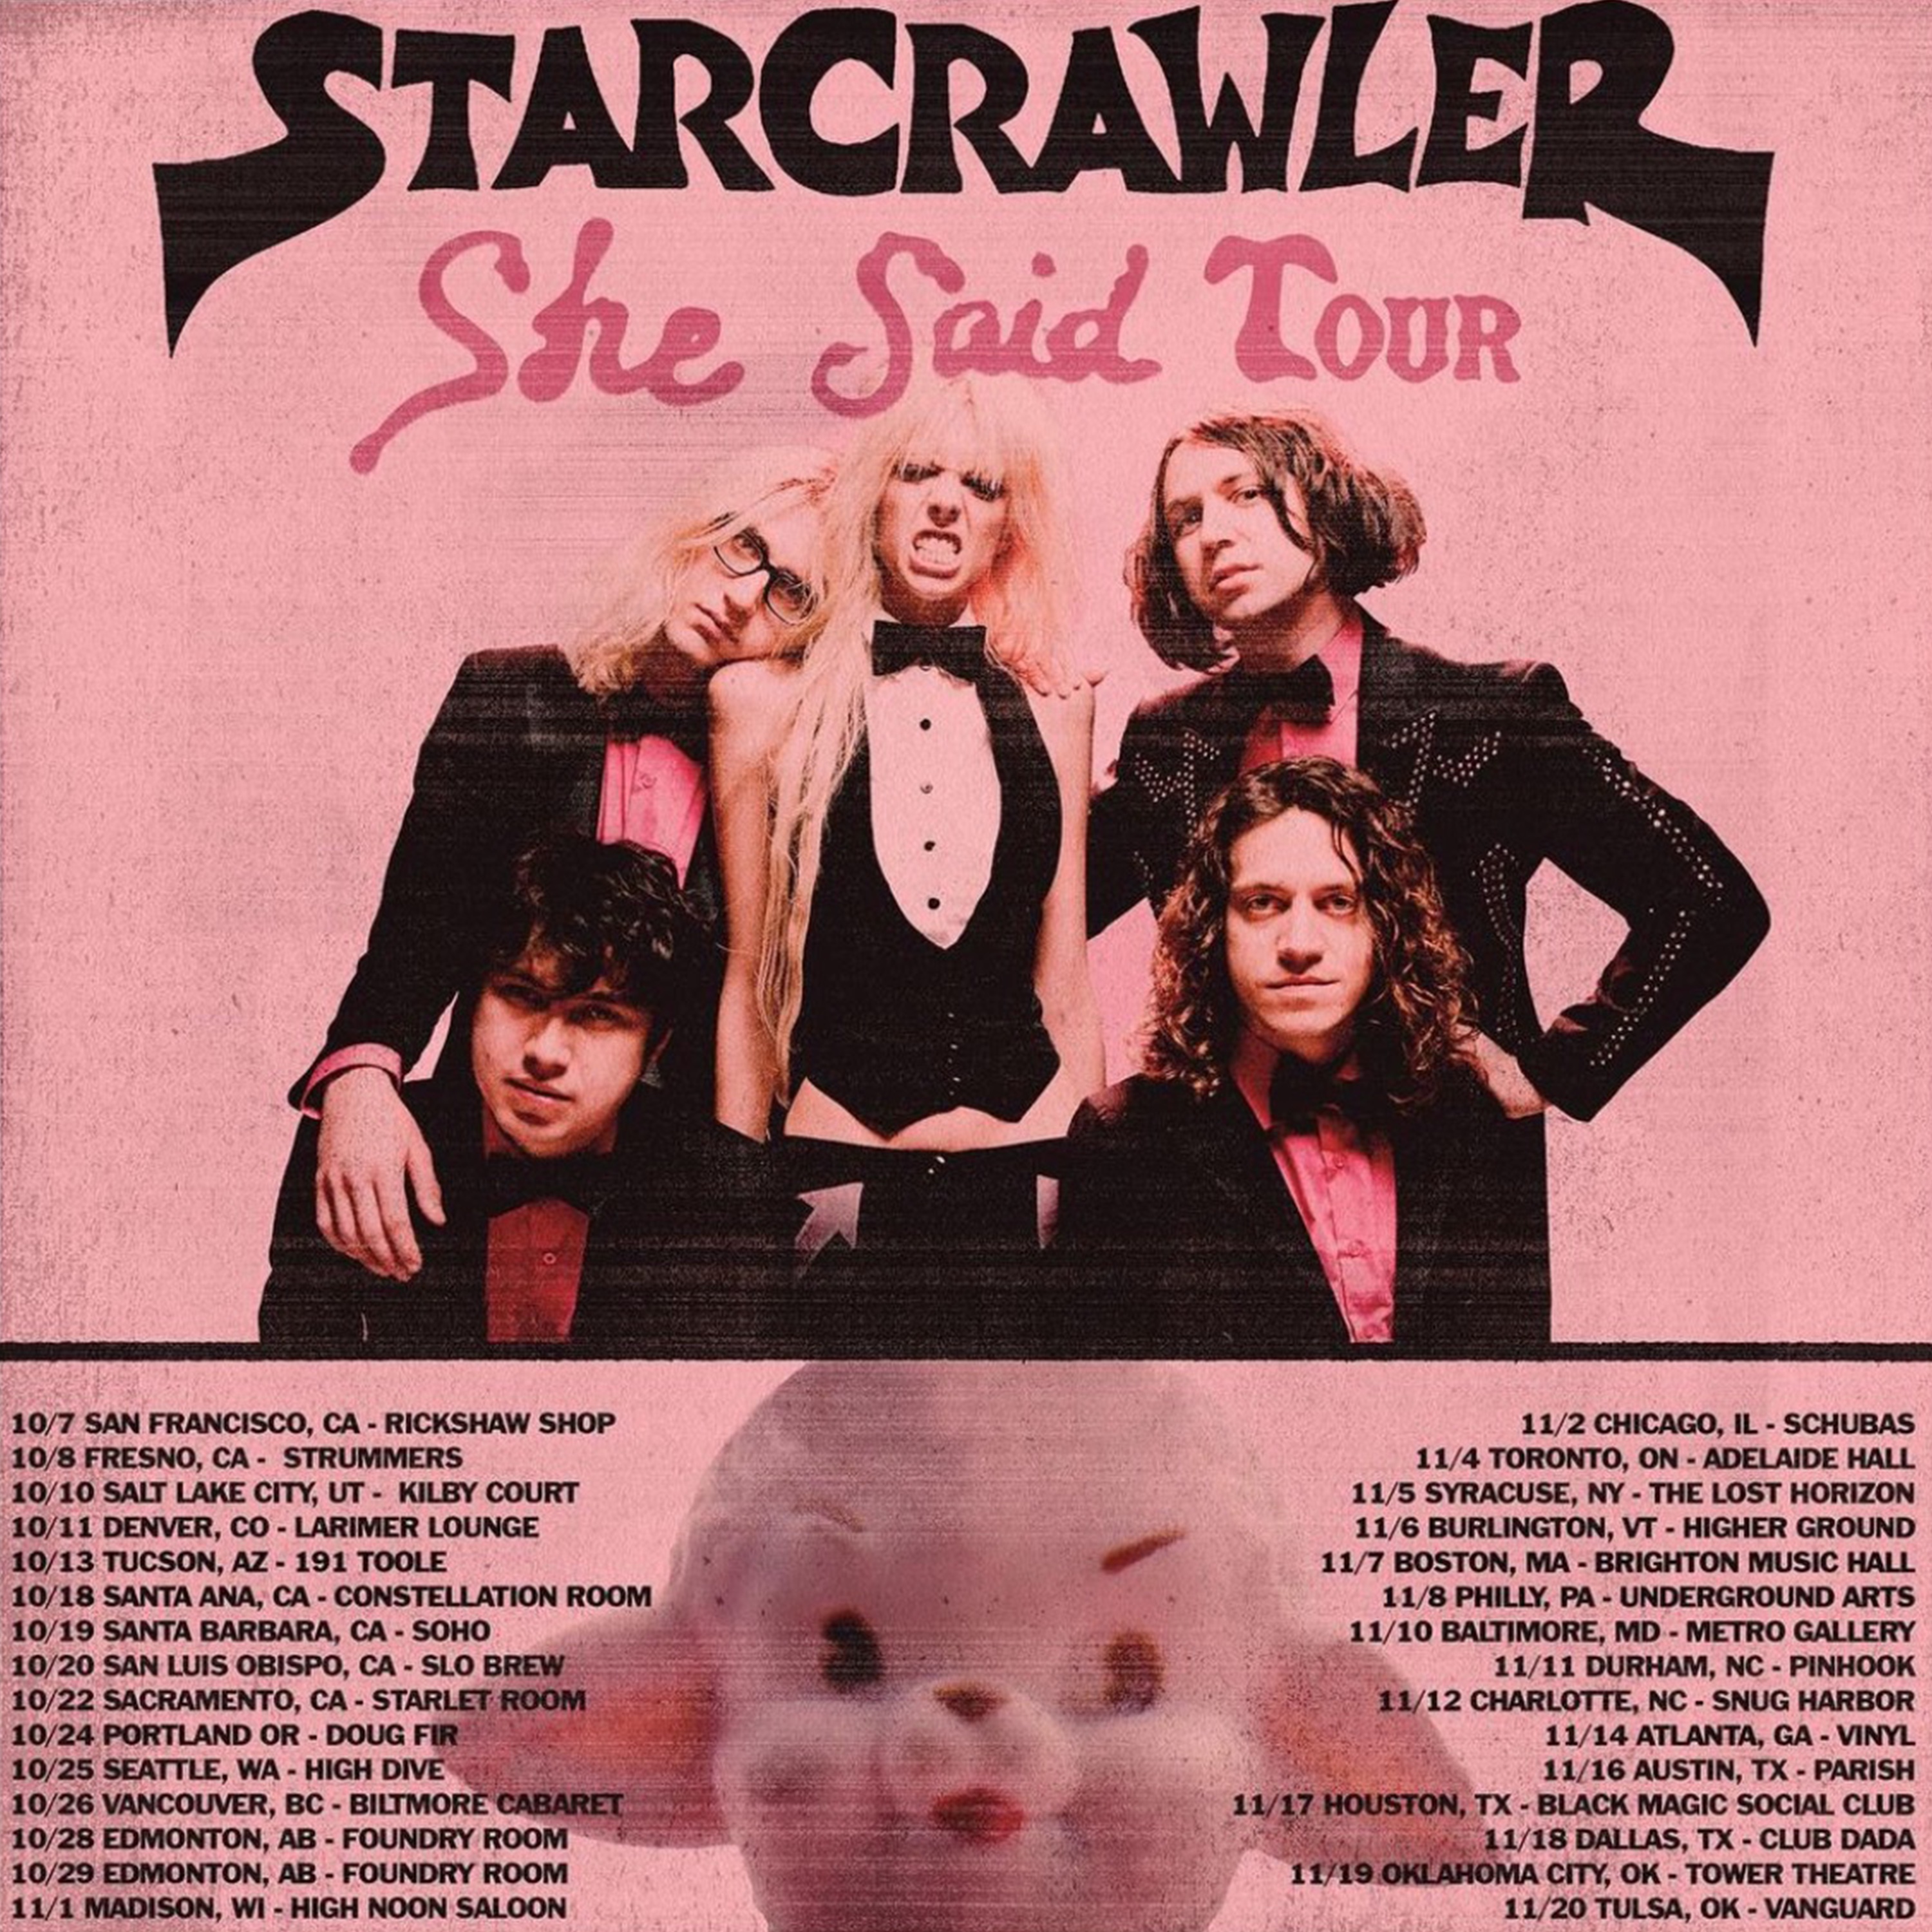 Starcrawler (Underground Arts, Philadelphia, PA, November 8, 2022) | I Just  Read About That...